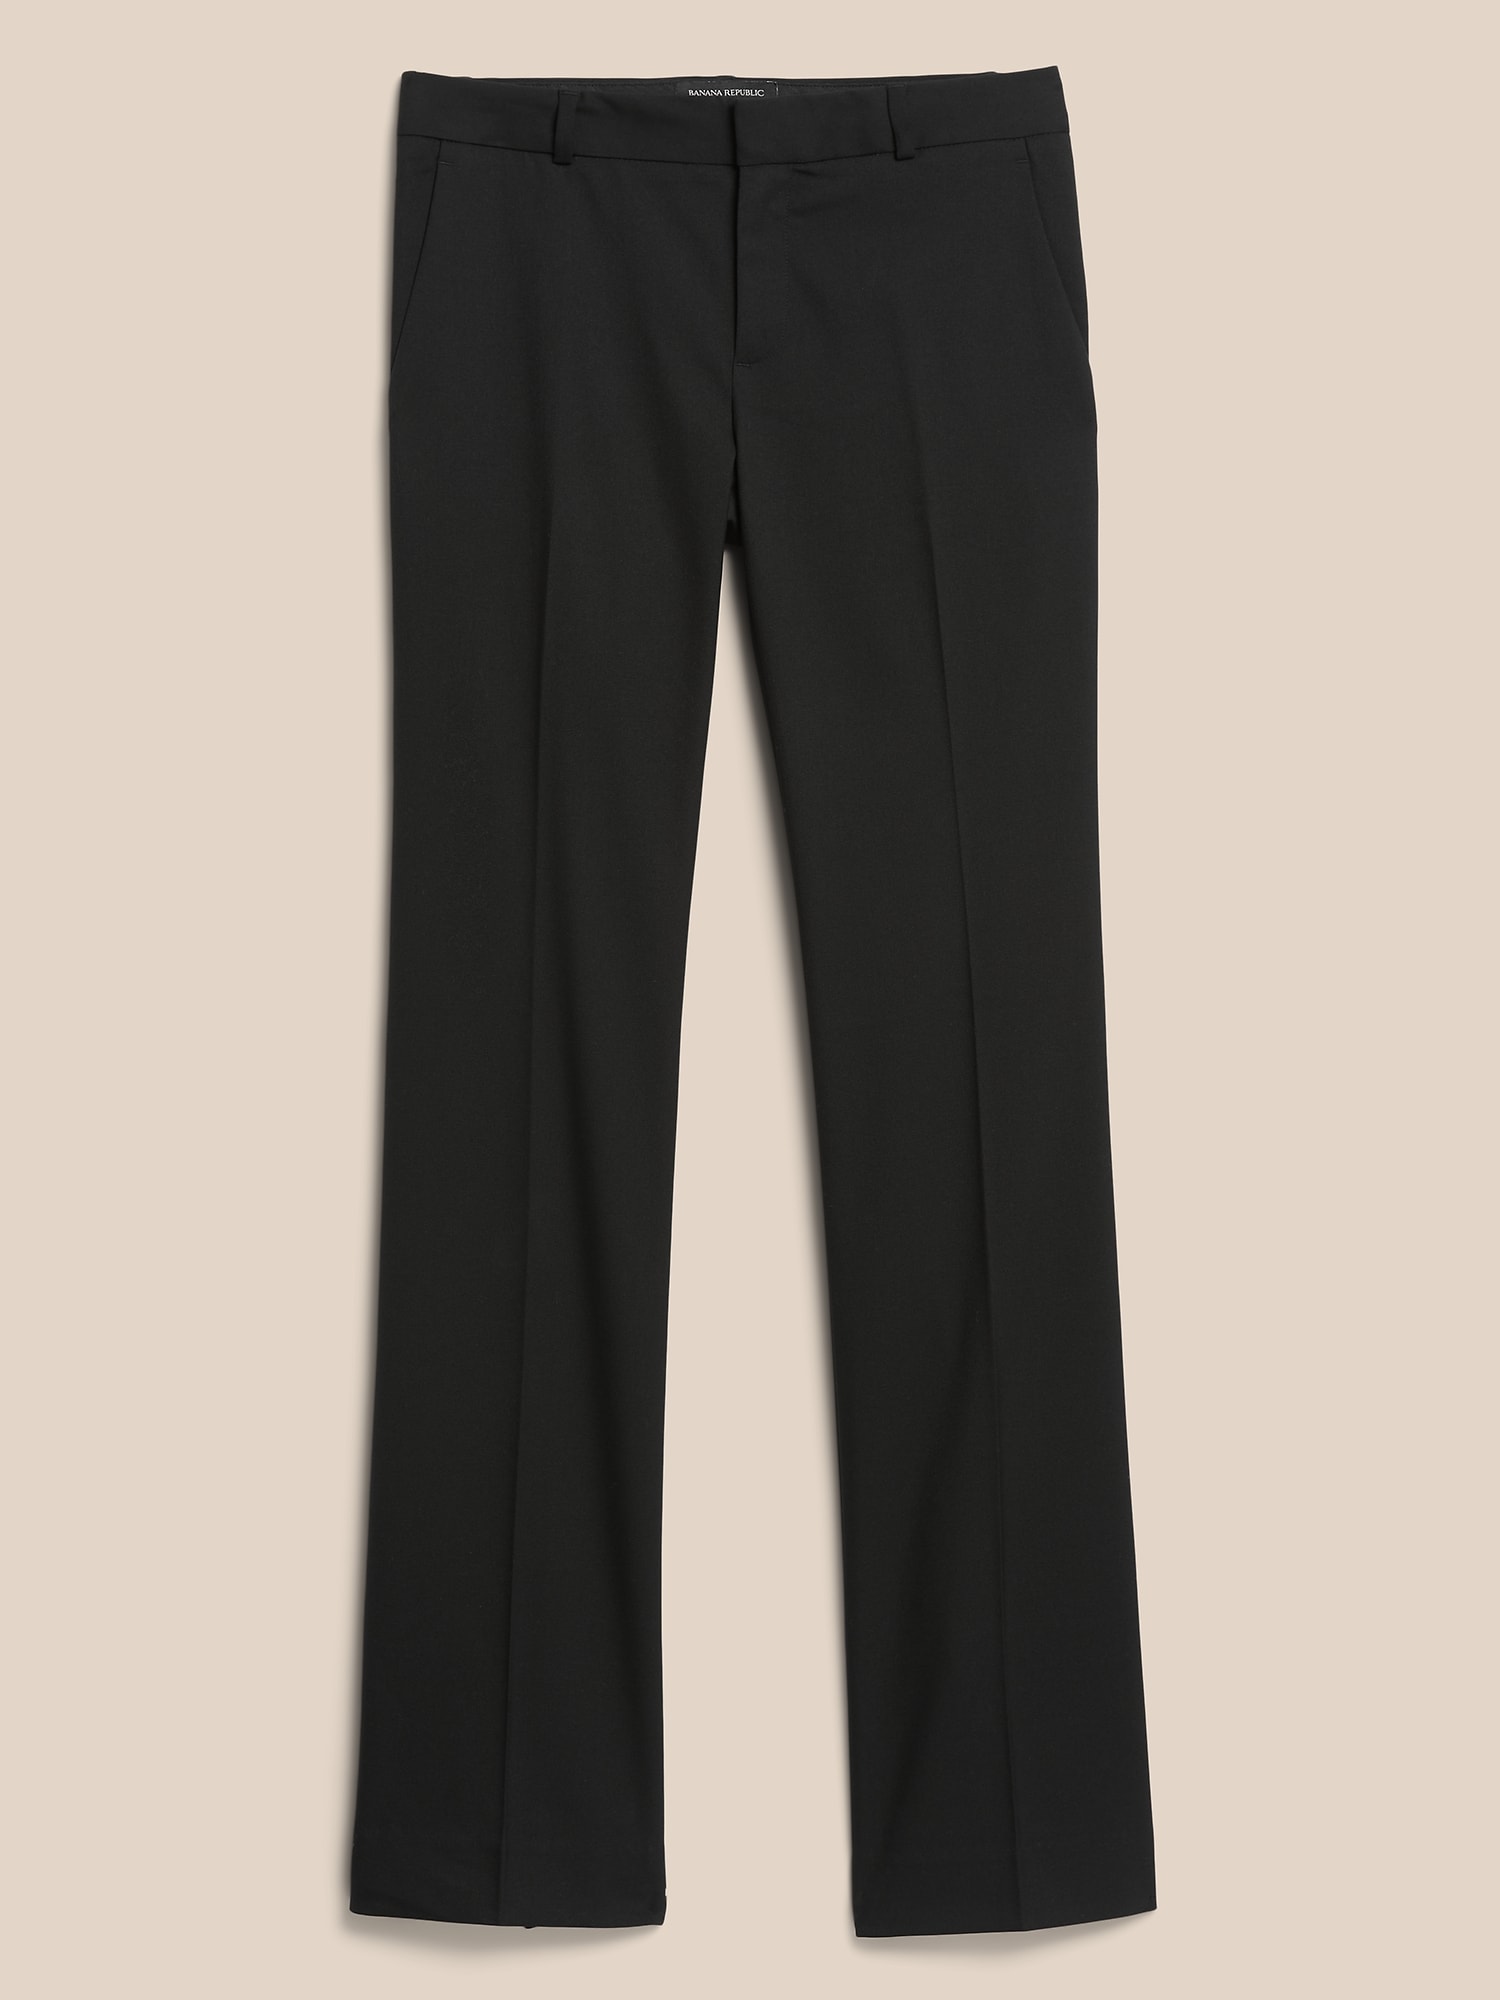 Washable Logan Classic Black Tailored Trouser